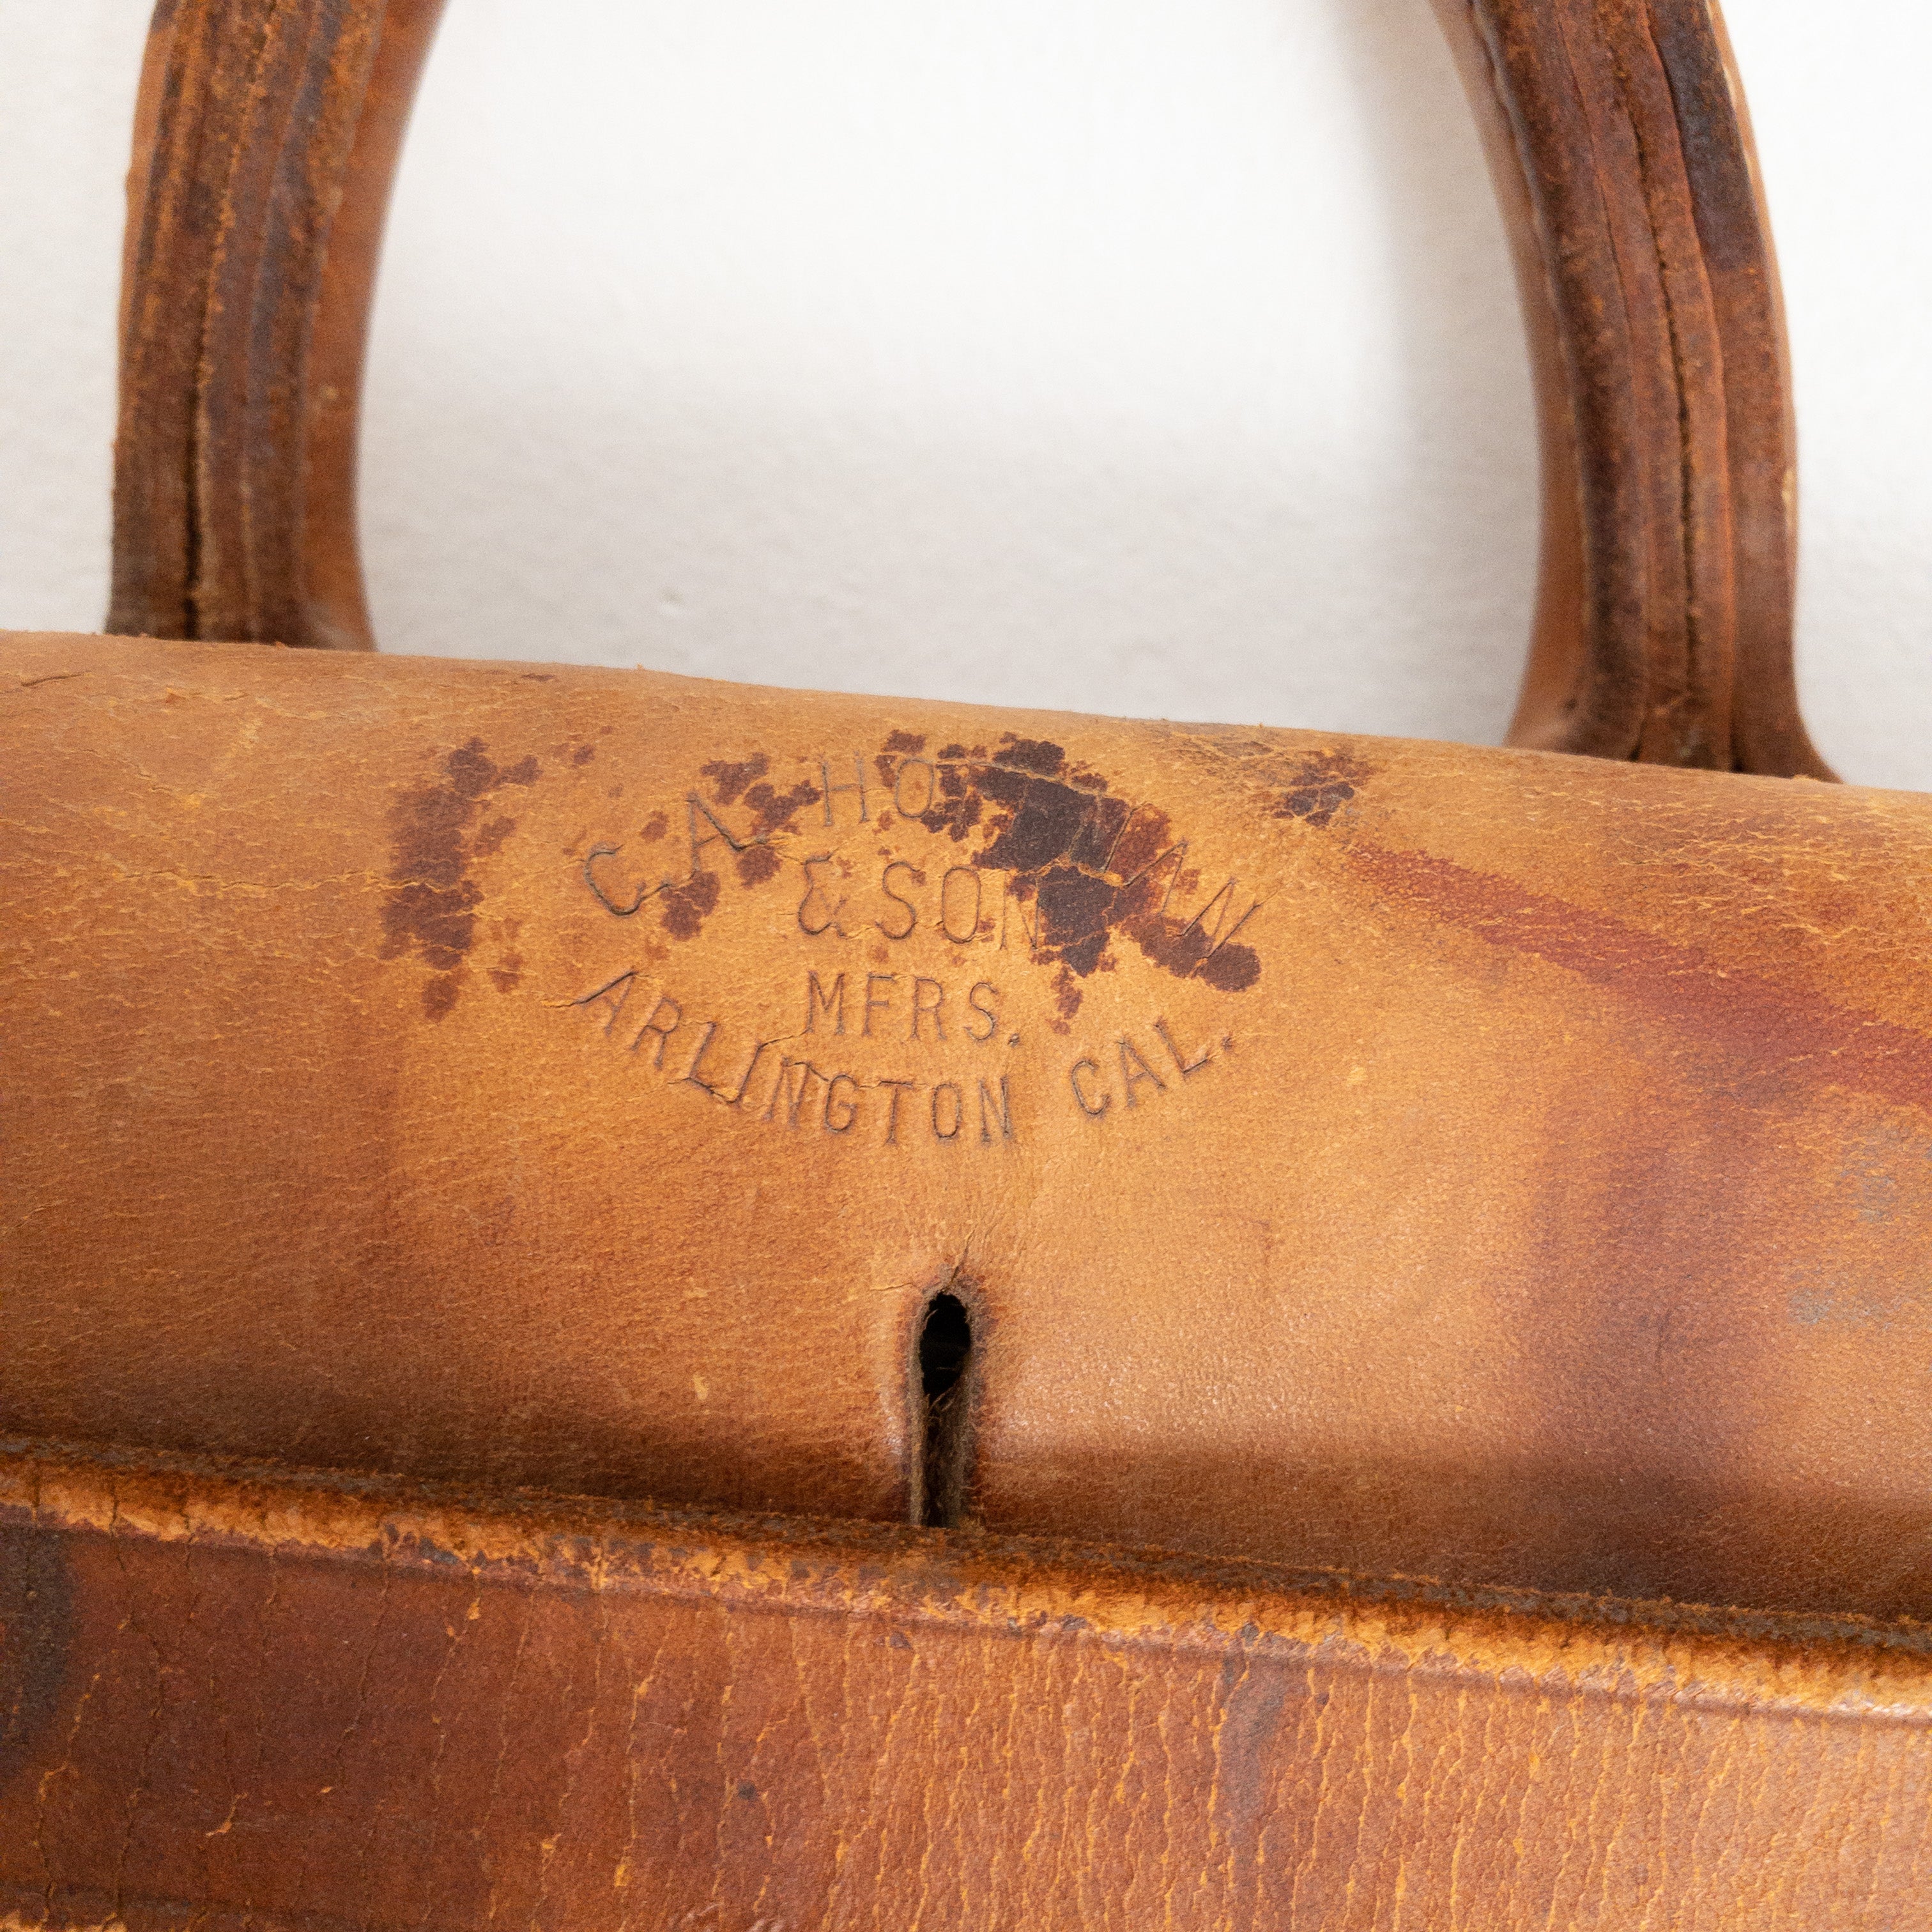 19th century gladstone bag